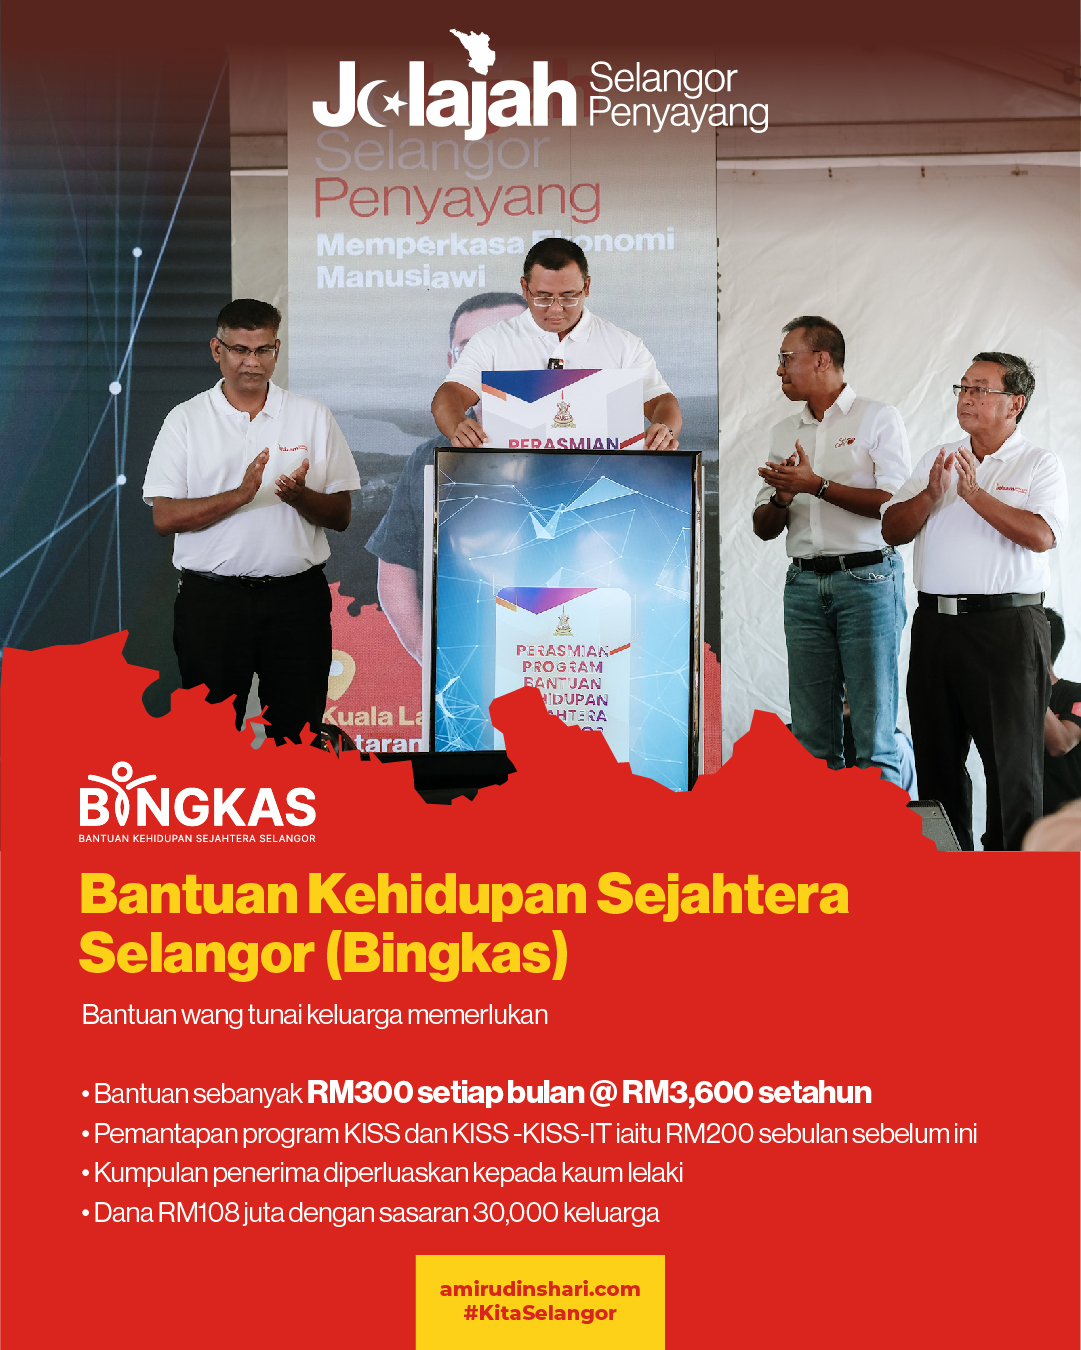 BINGKAS Bantuan Kehidupan Sejahtera Selangor RM300 Sebulan 1